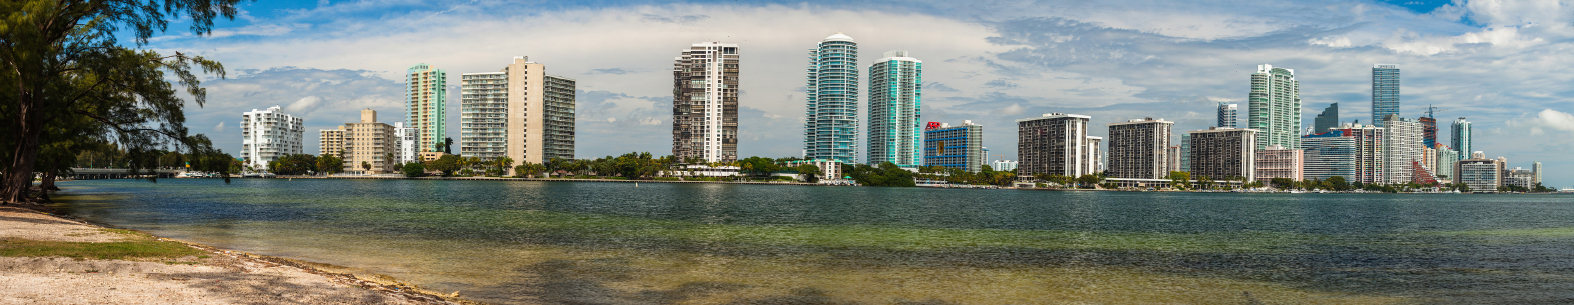 VR Business Brokers Miami,Coral Gables, FL - Vendre Son Business